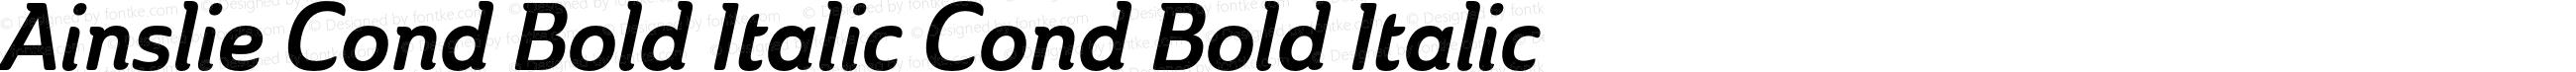 Ainslie Cond Bold Italic Cond Bold Italic